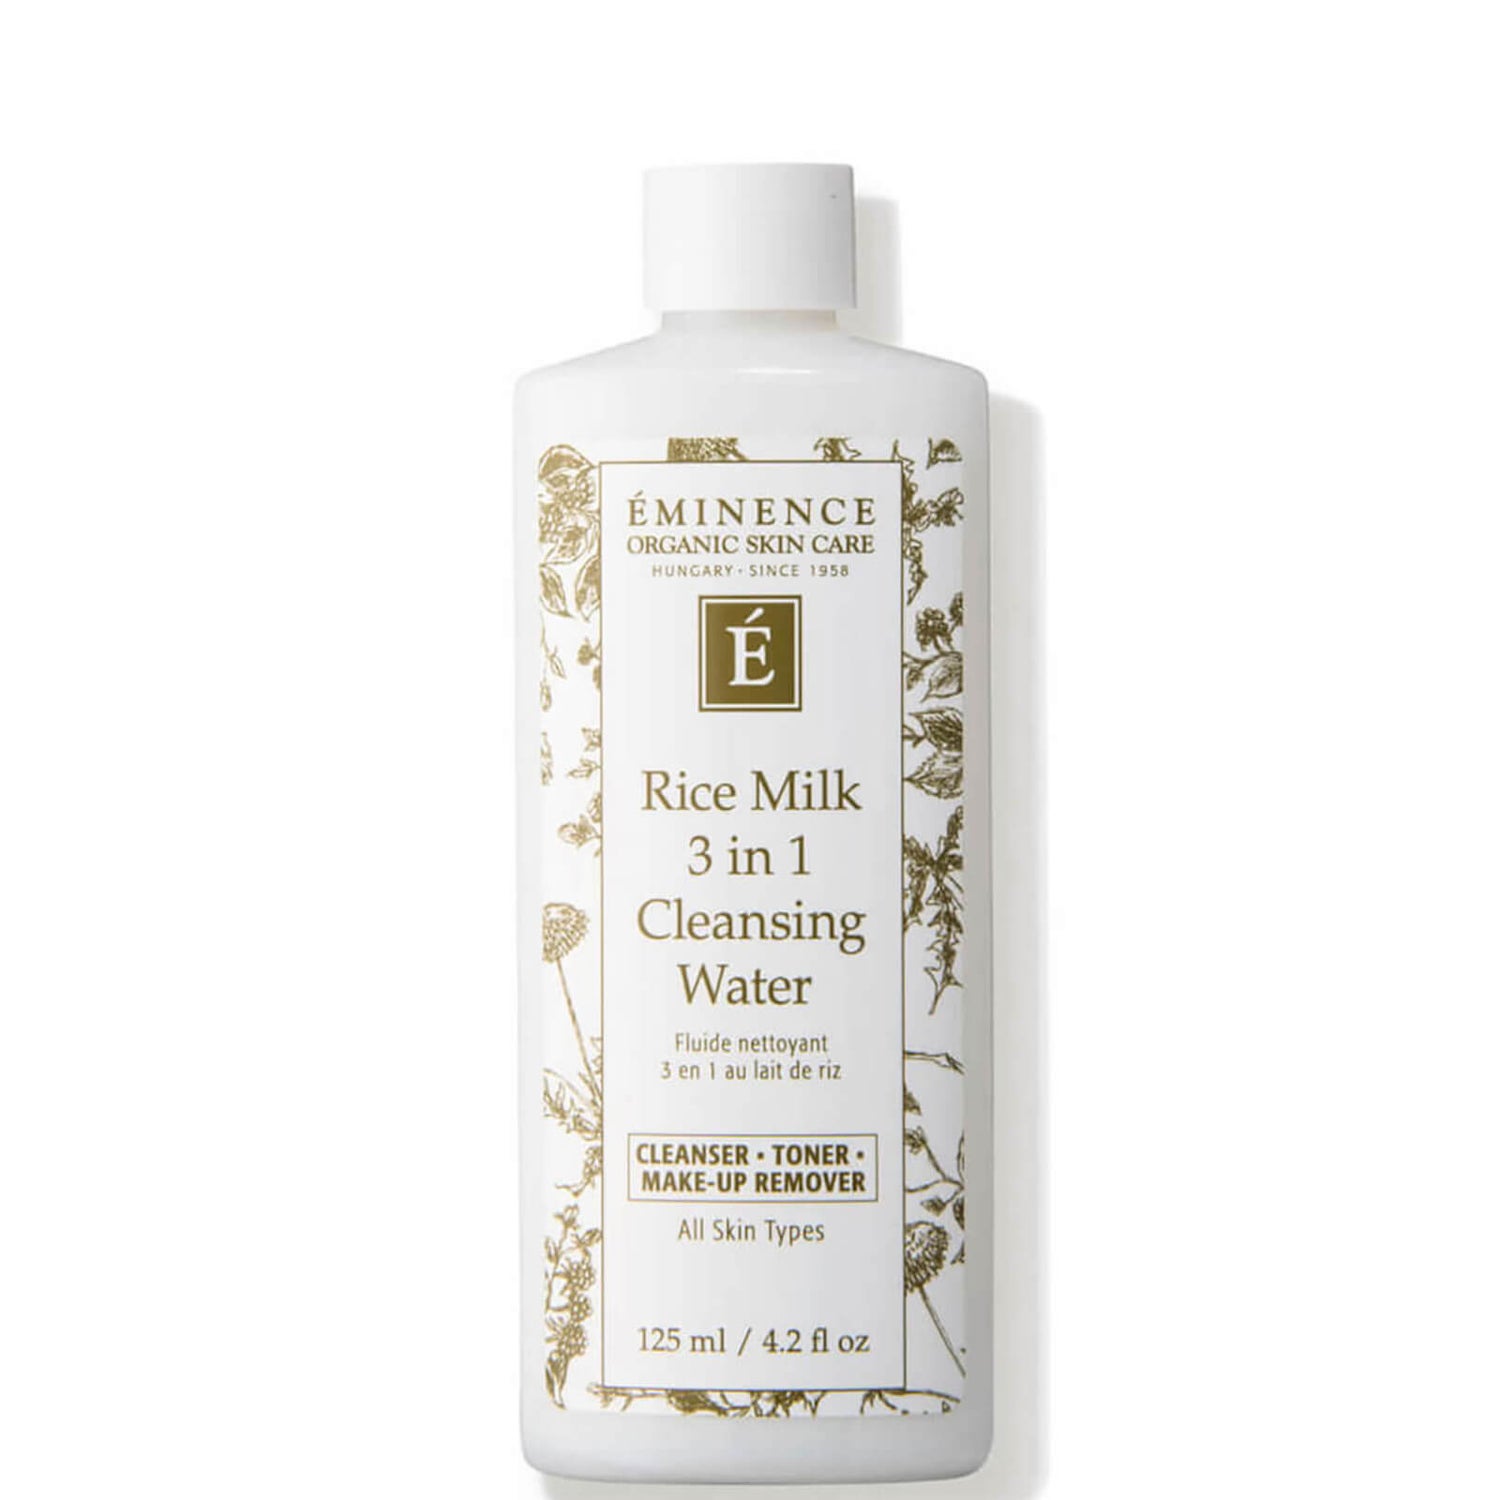 Eminence Organic Skin Care Rice Milk 3 in 1 Cleansing Water 4.2 fl. oz